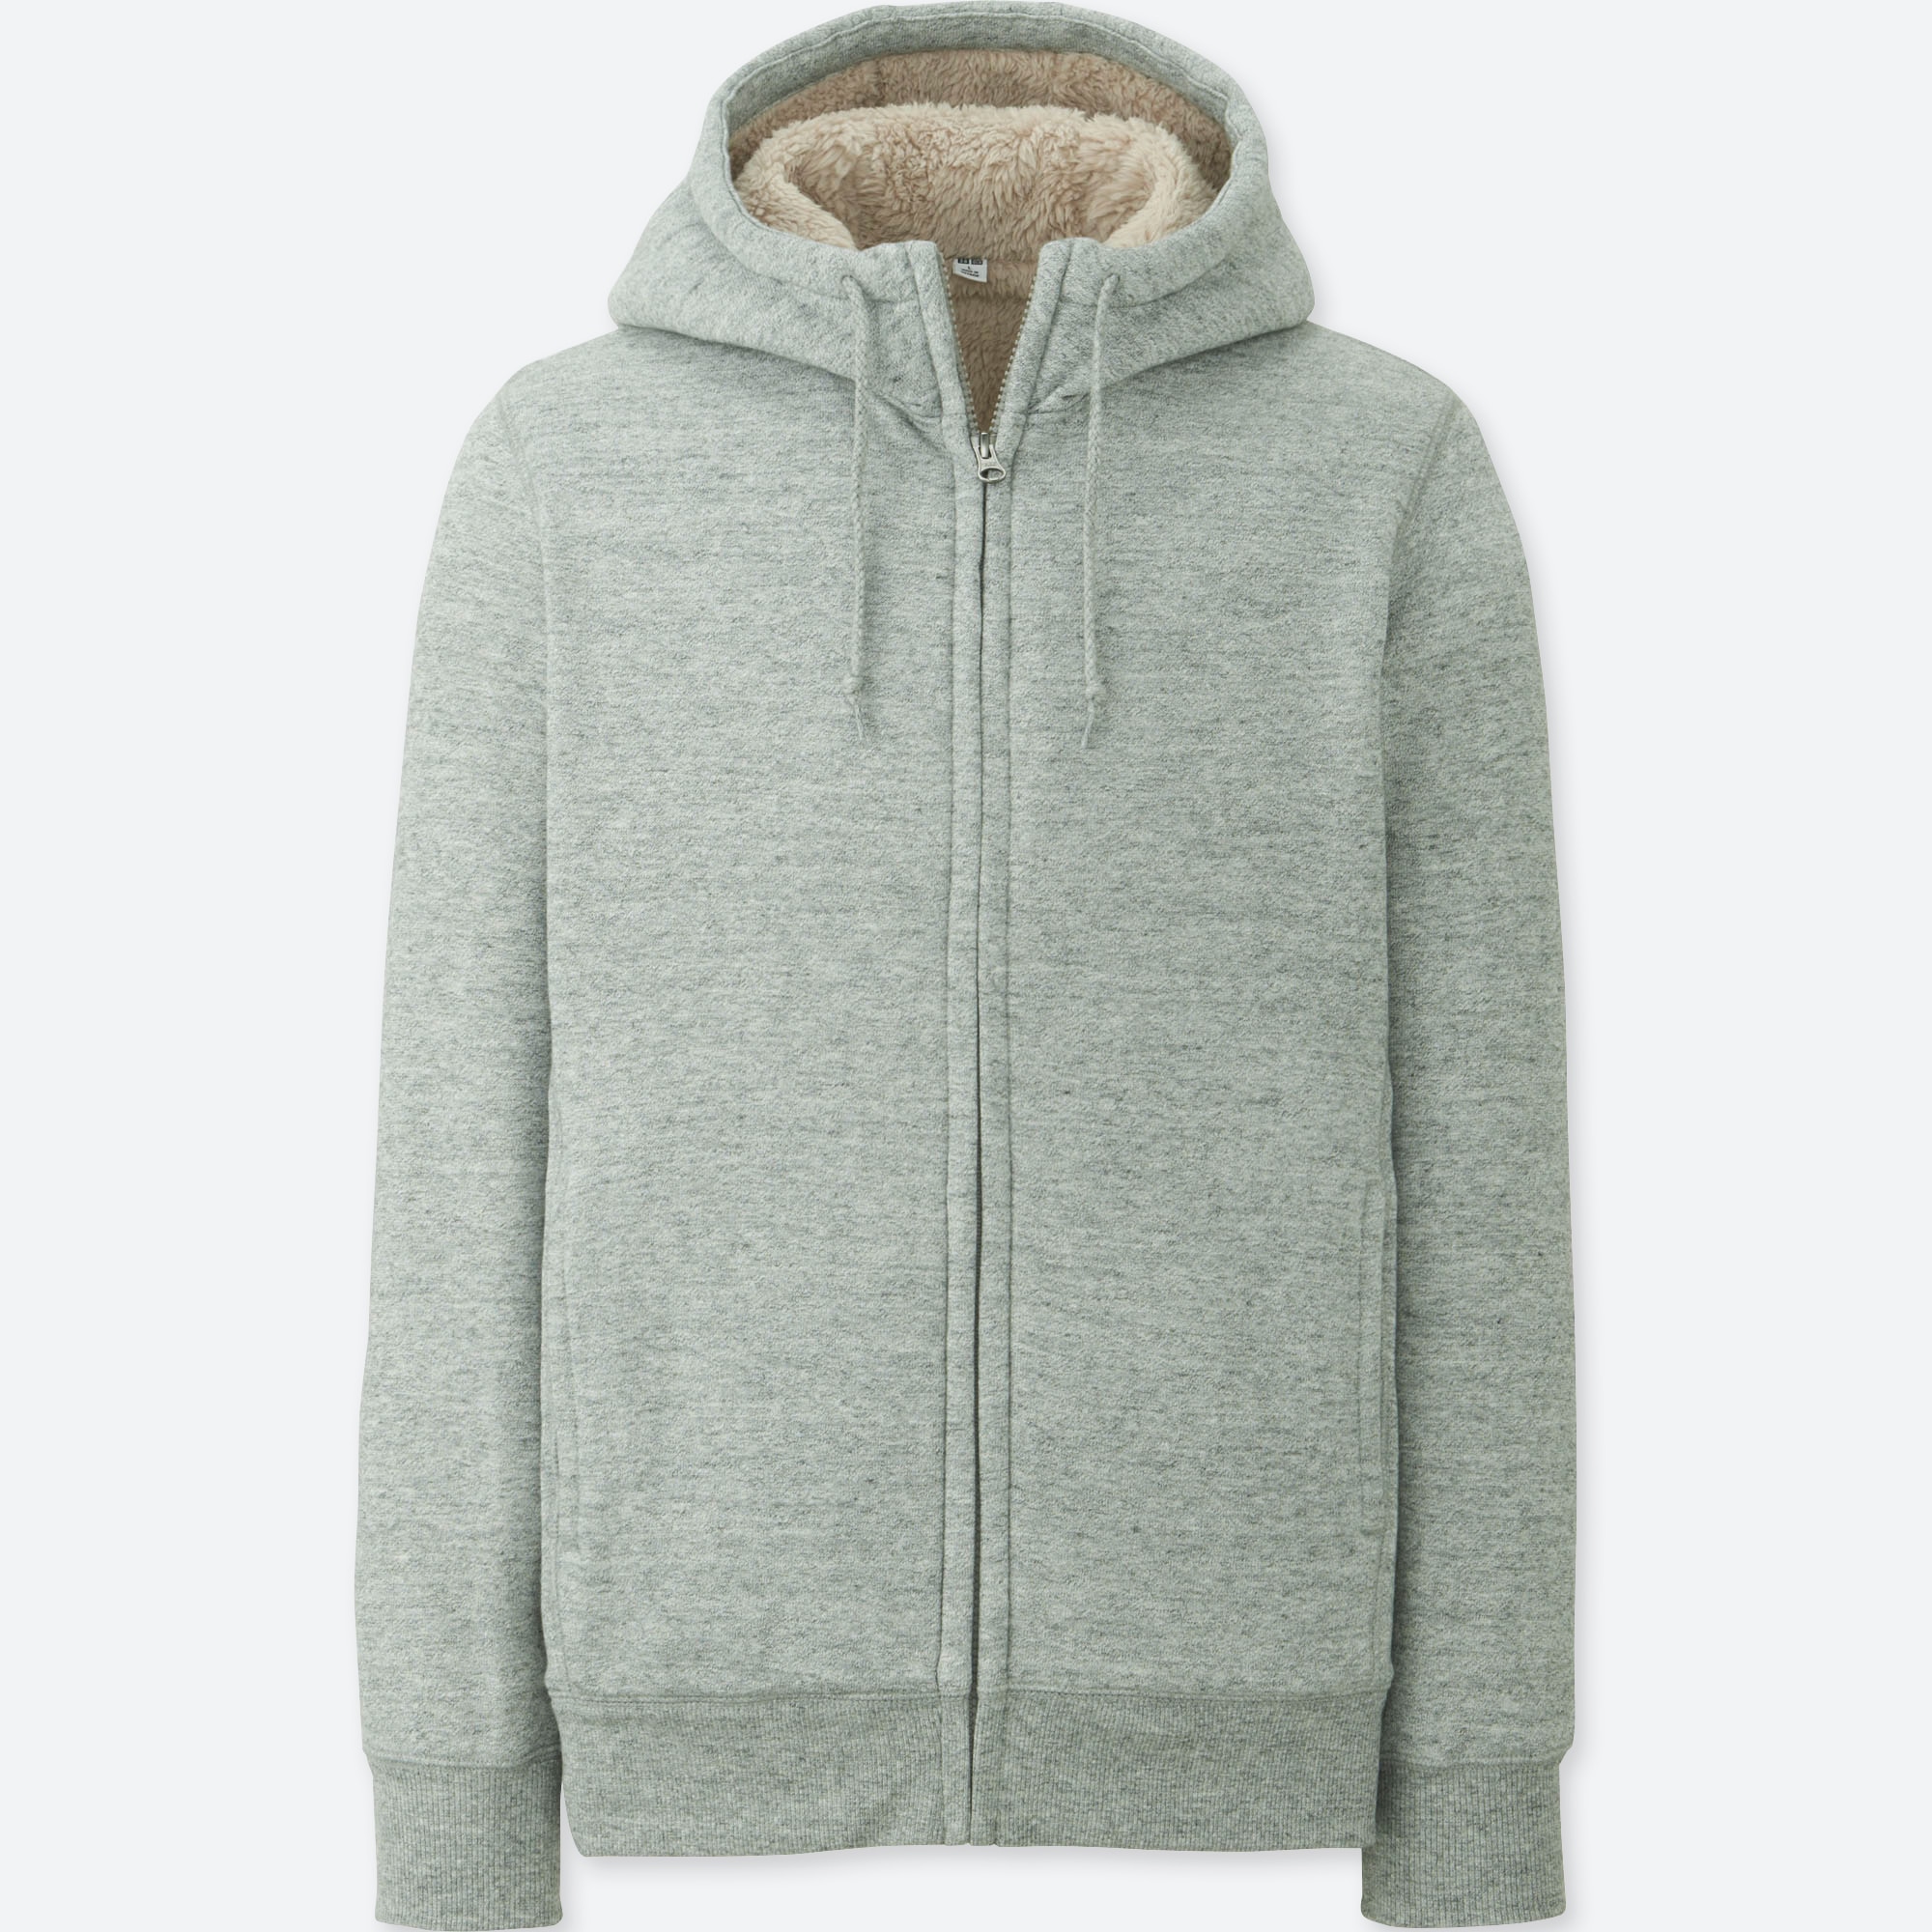 gray sweater hoodie